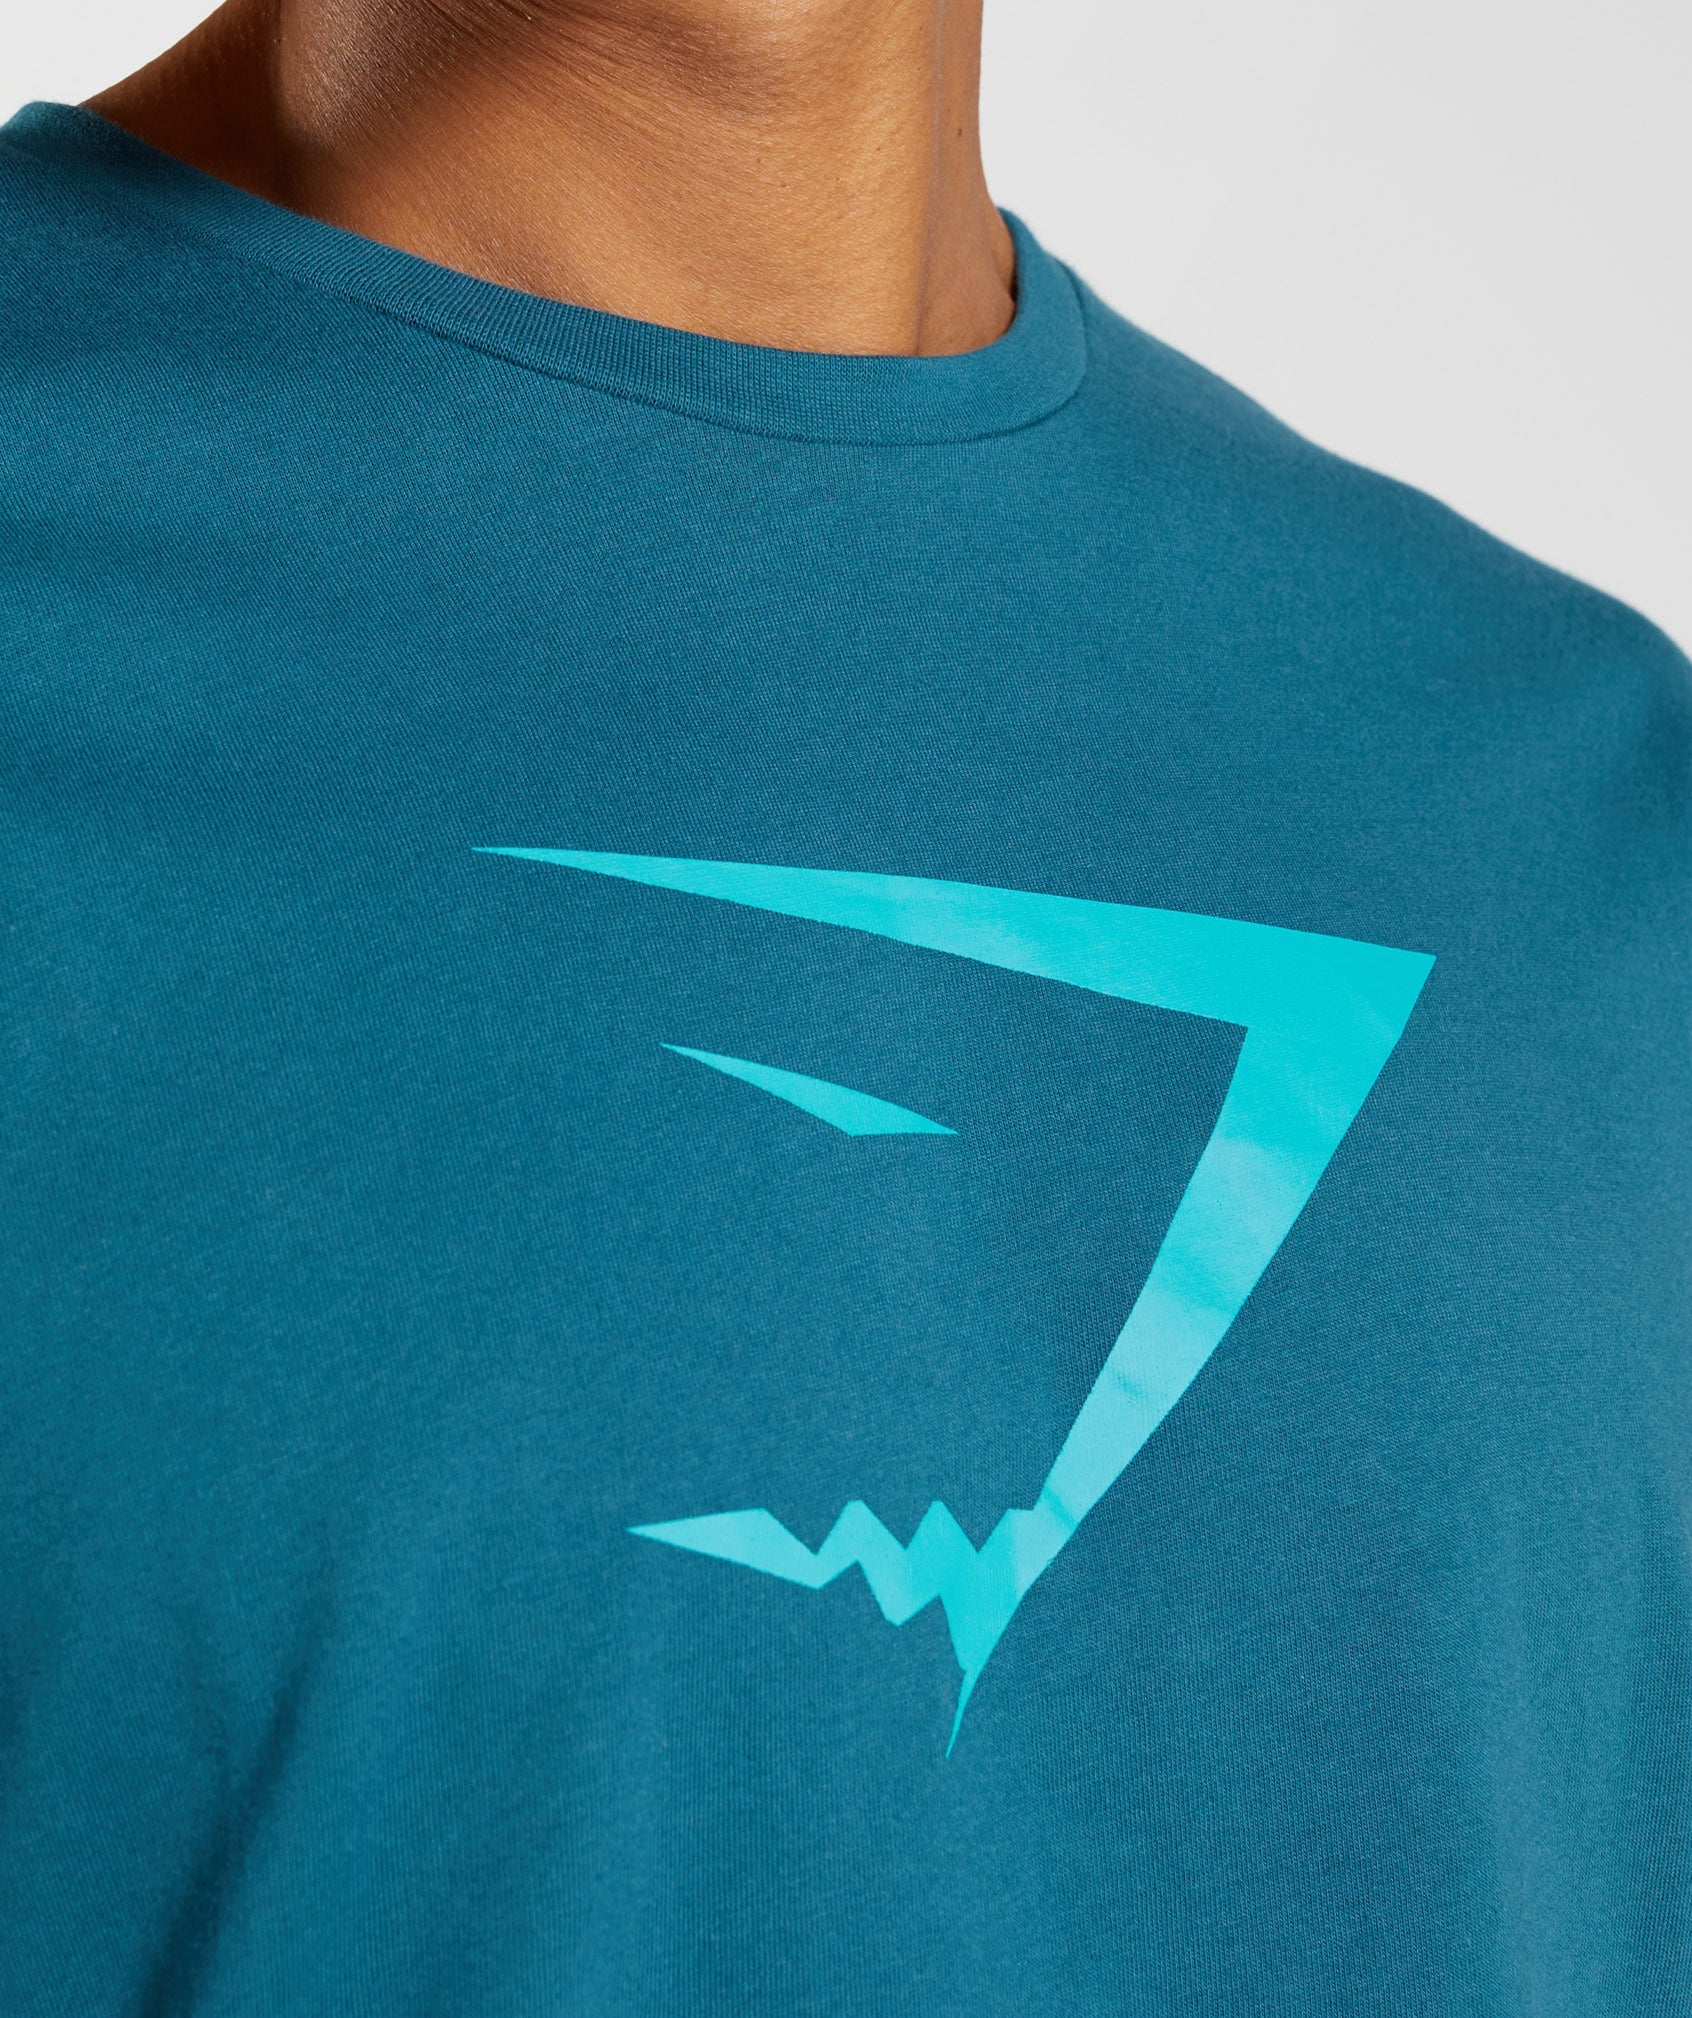 Sharkhead Infill T-Shirt in Atlantic Blue - view 3